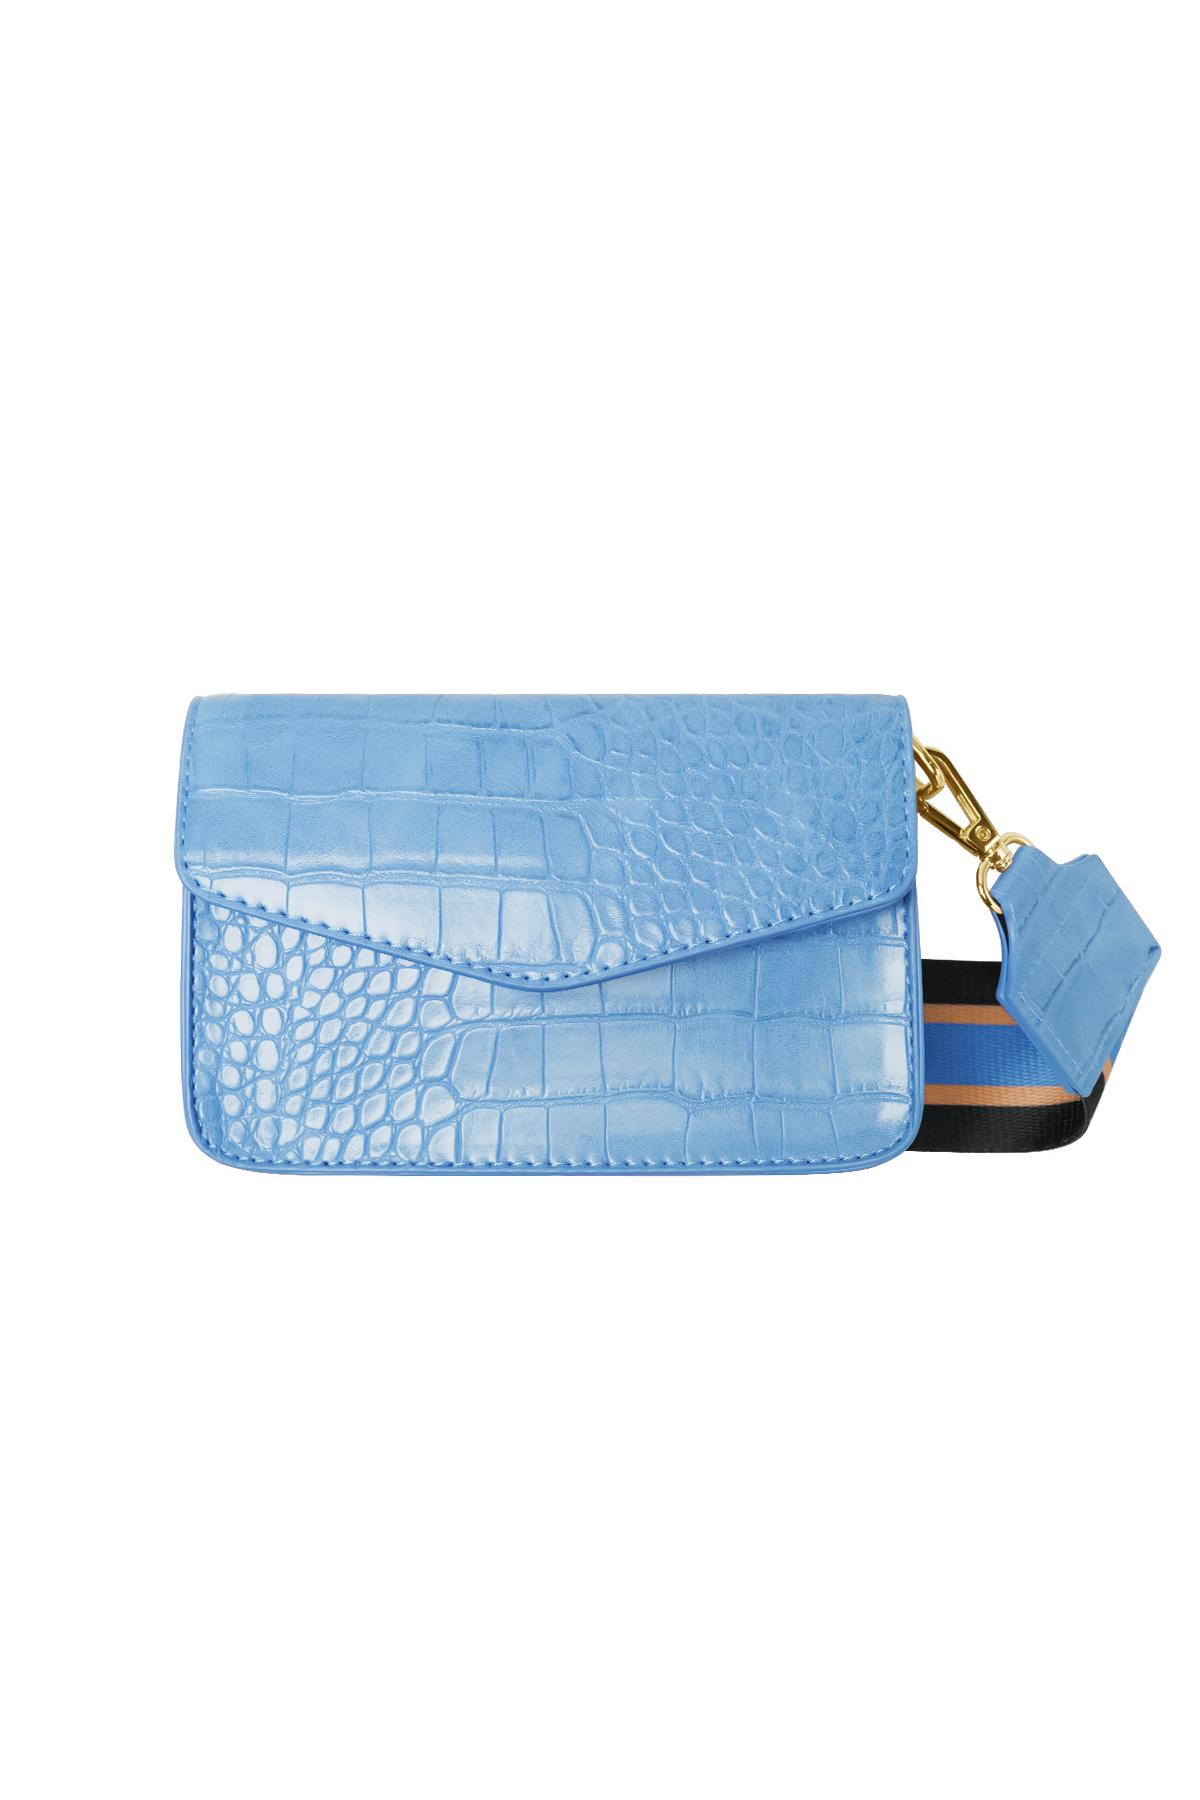 Small crocodile bag with wide bag strap Blue PU